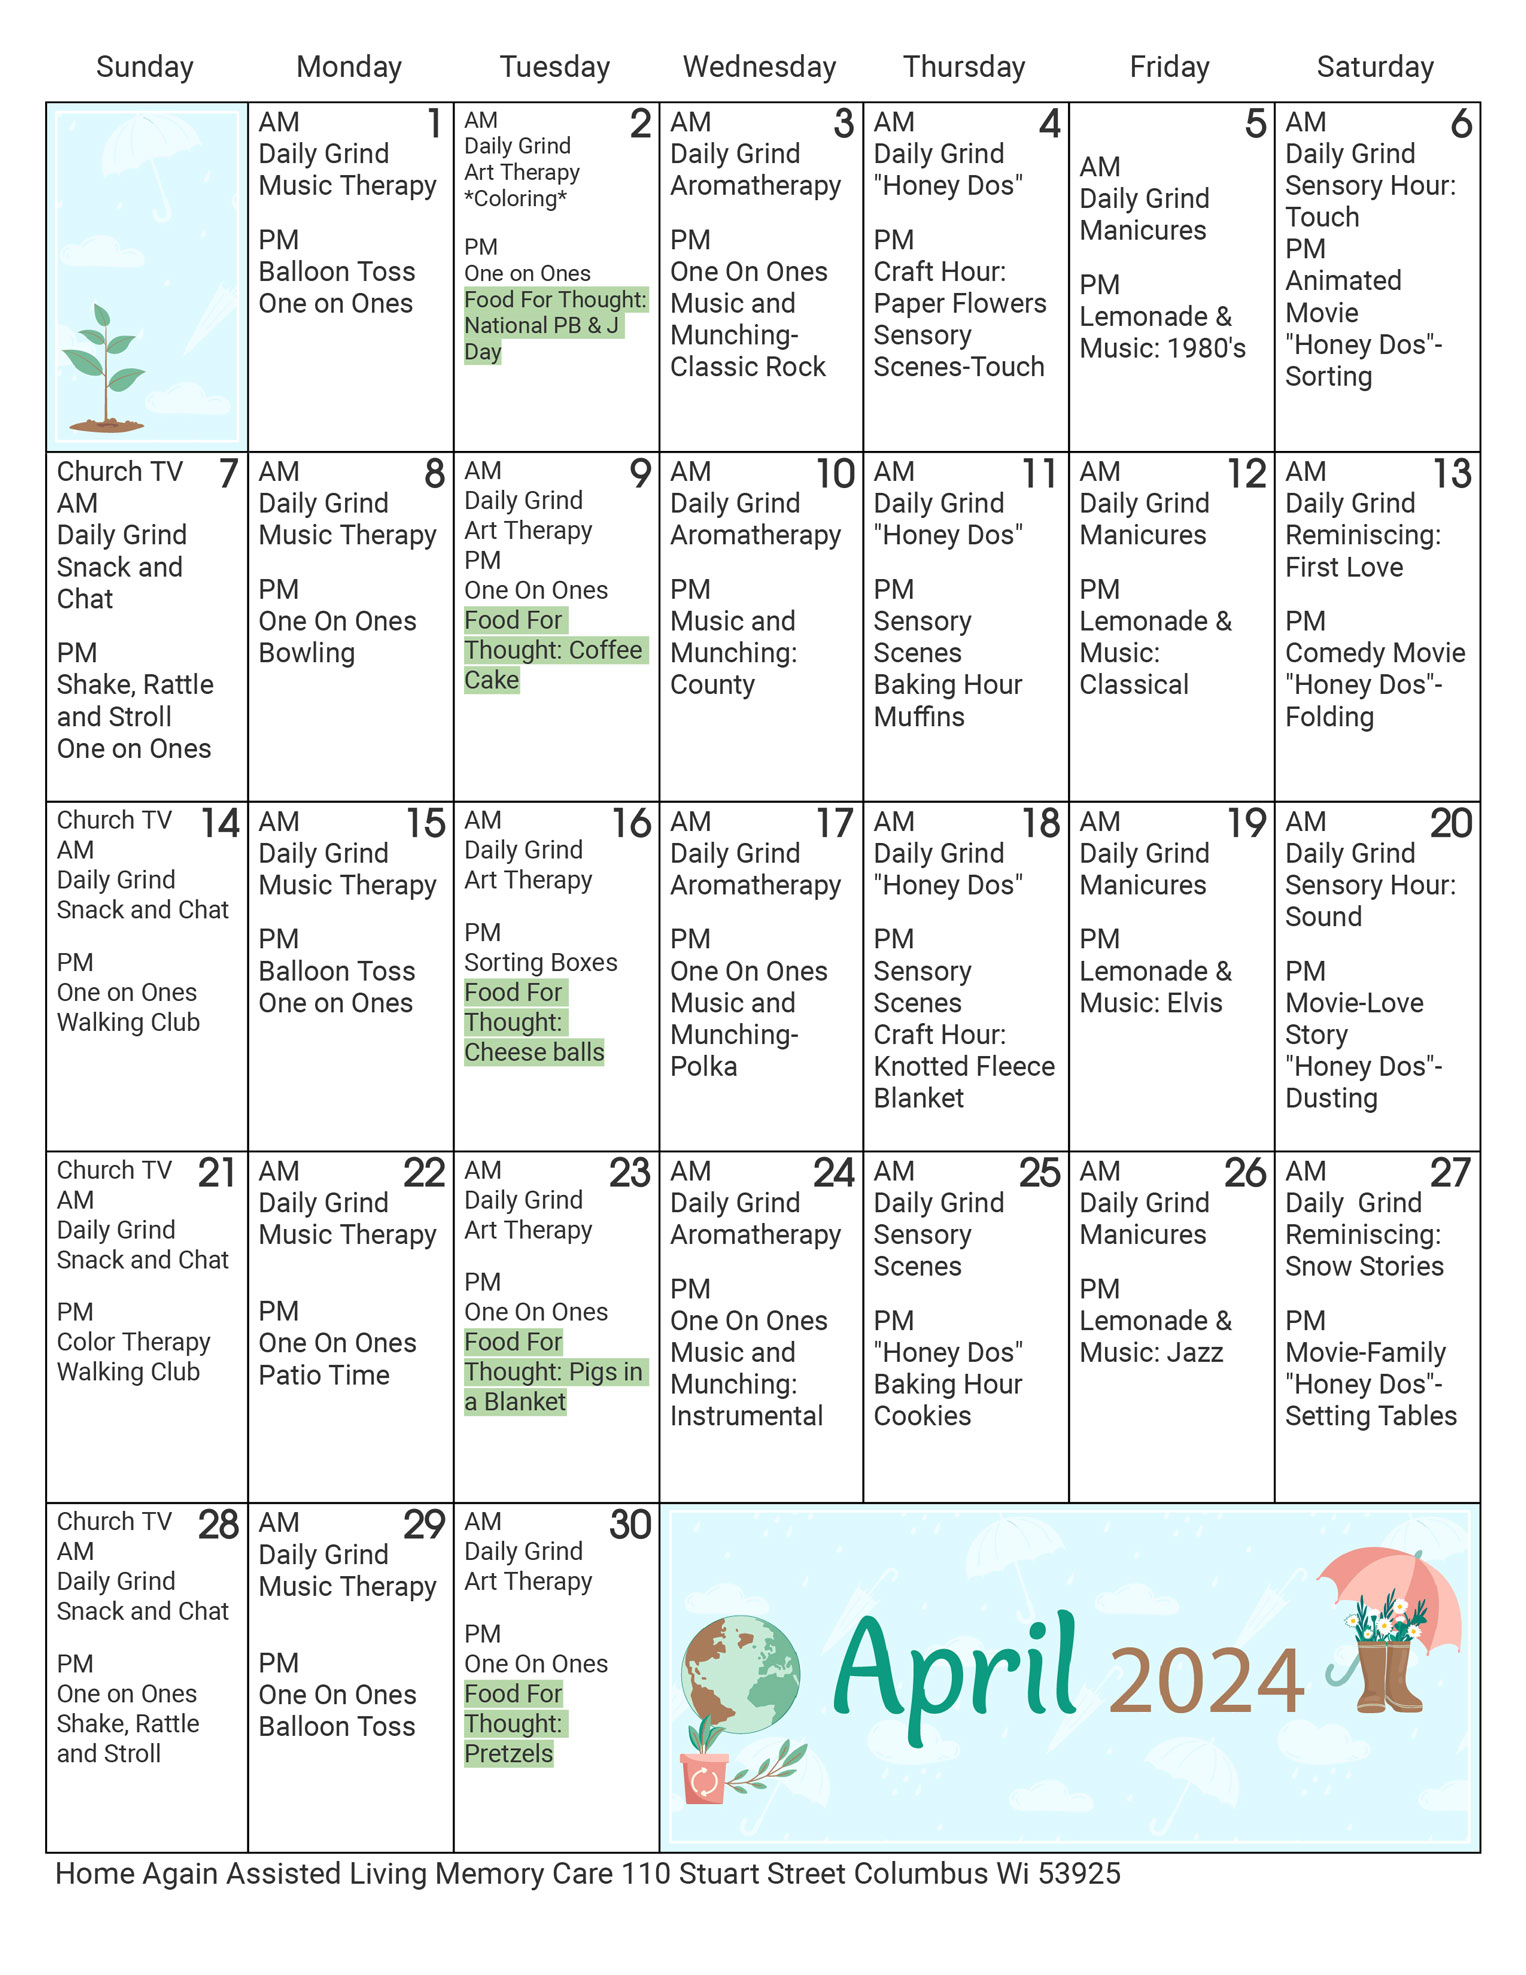 Columbus Memory Care April 2024 Activity Calendar